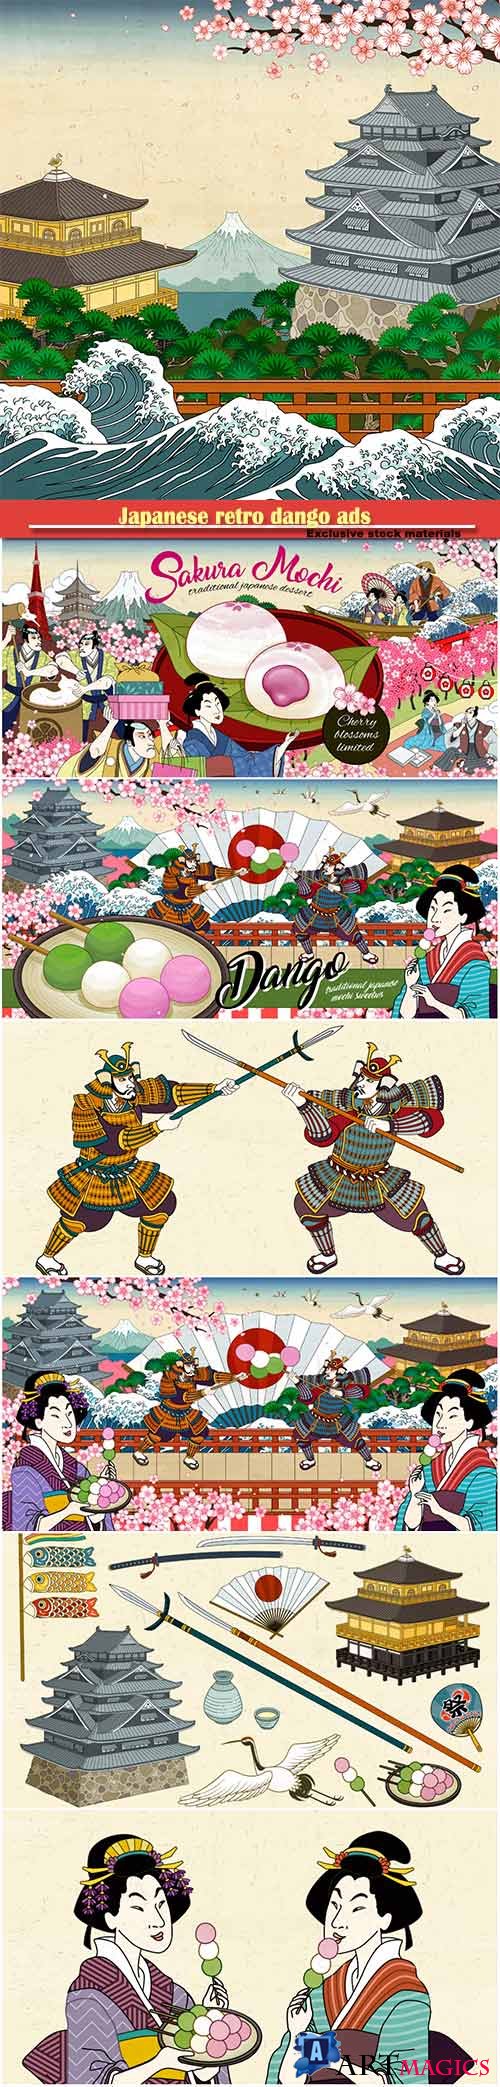 Japanese retro dango ads, cultural symbols, historical landmarks